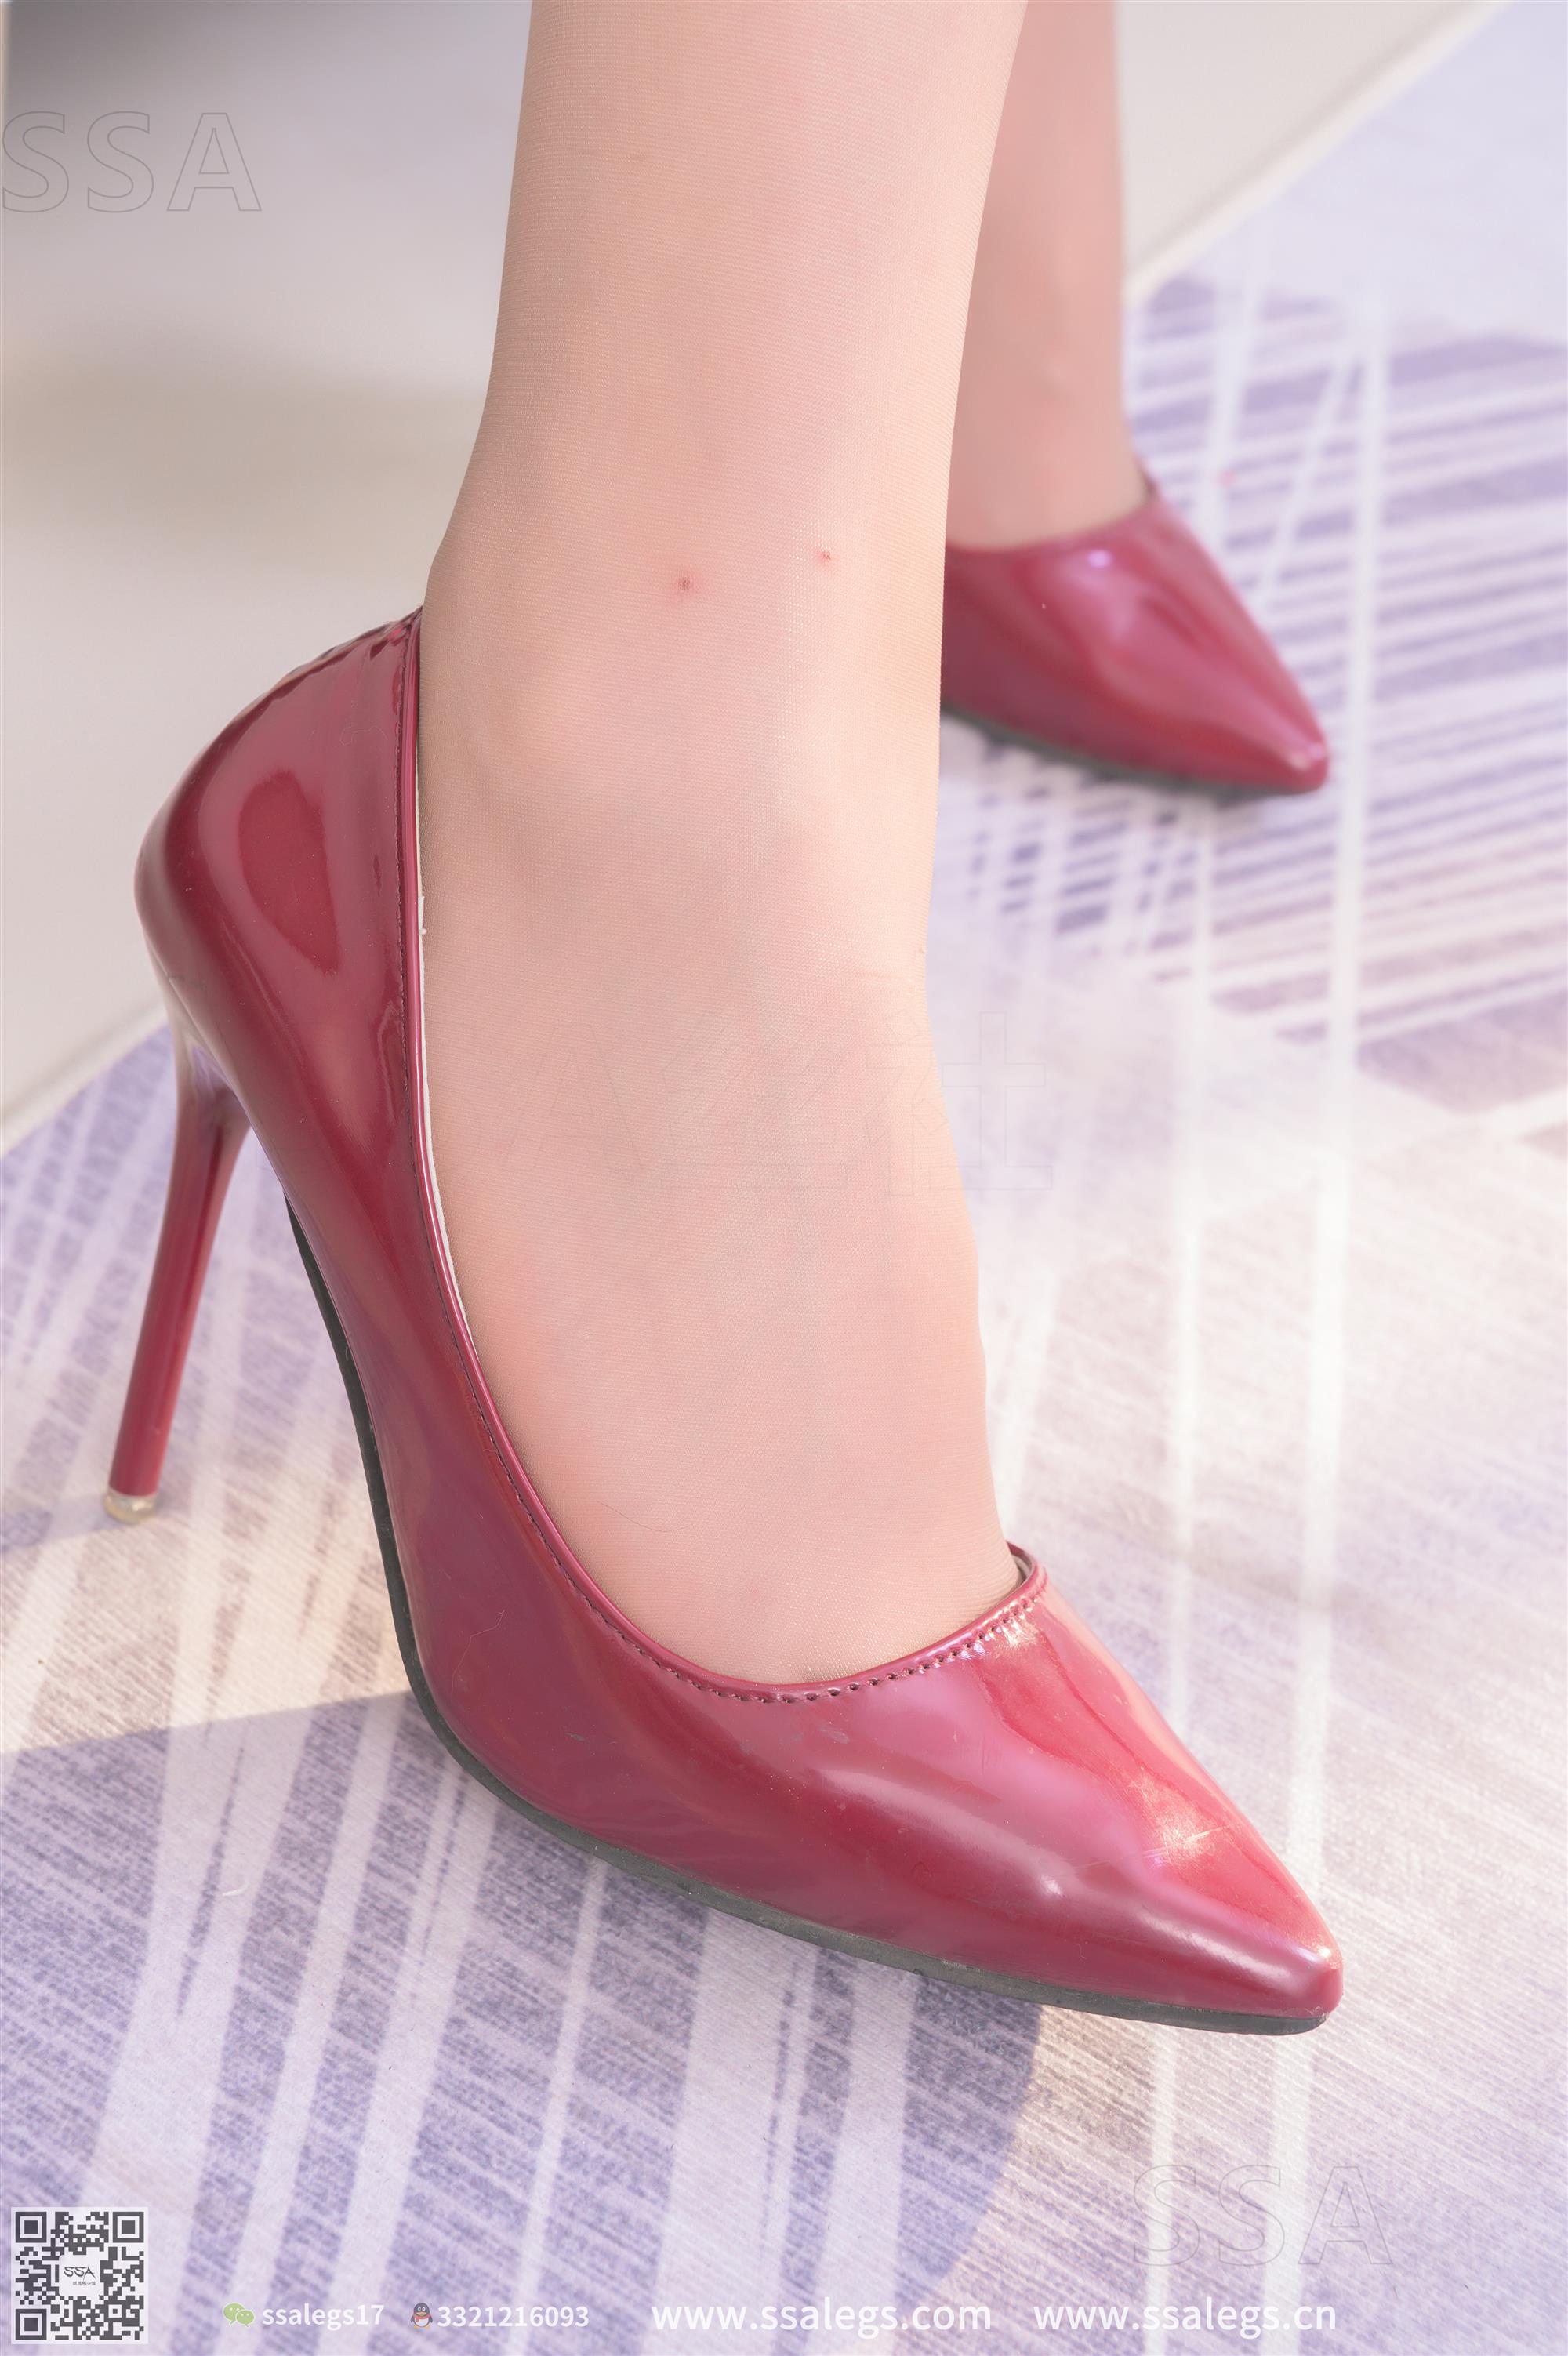 SSA 丝社 No.312 娜娜御姐的红色高跟鞋咖啡丝美腿 - 15.jpg